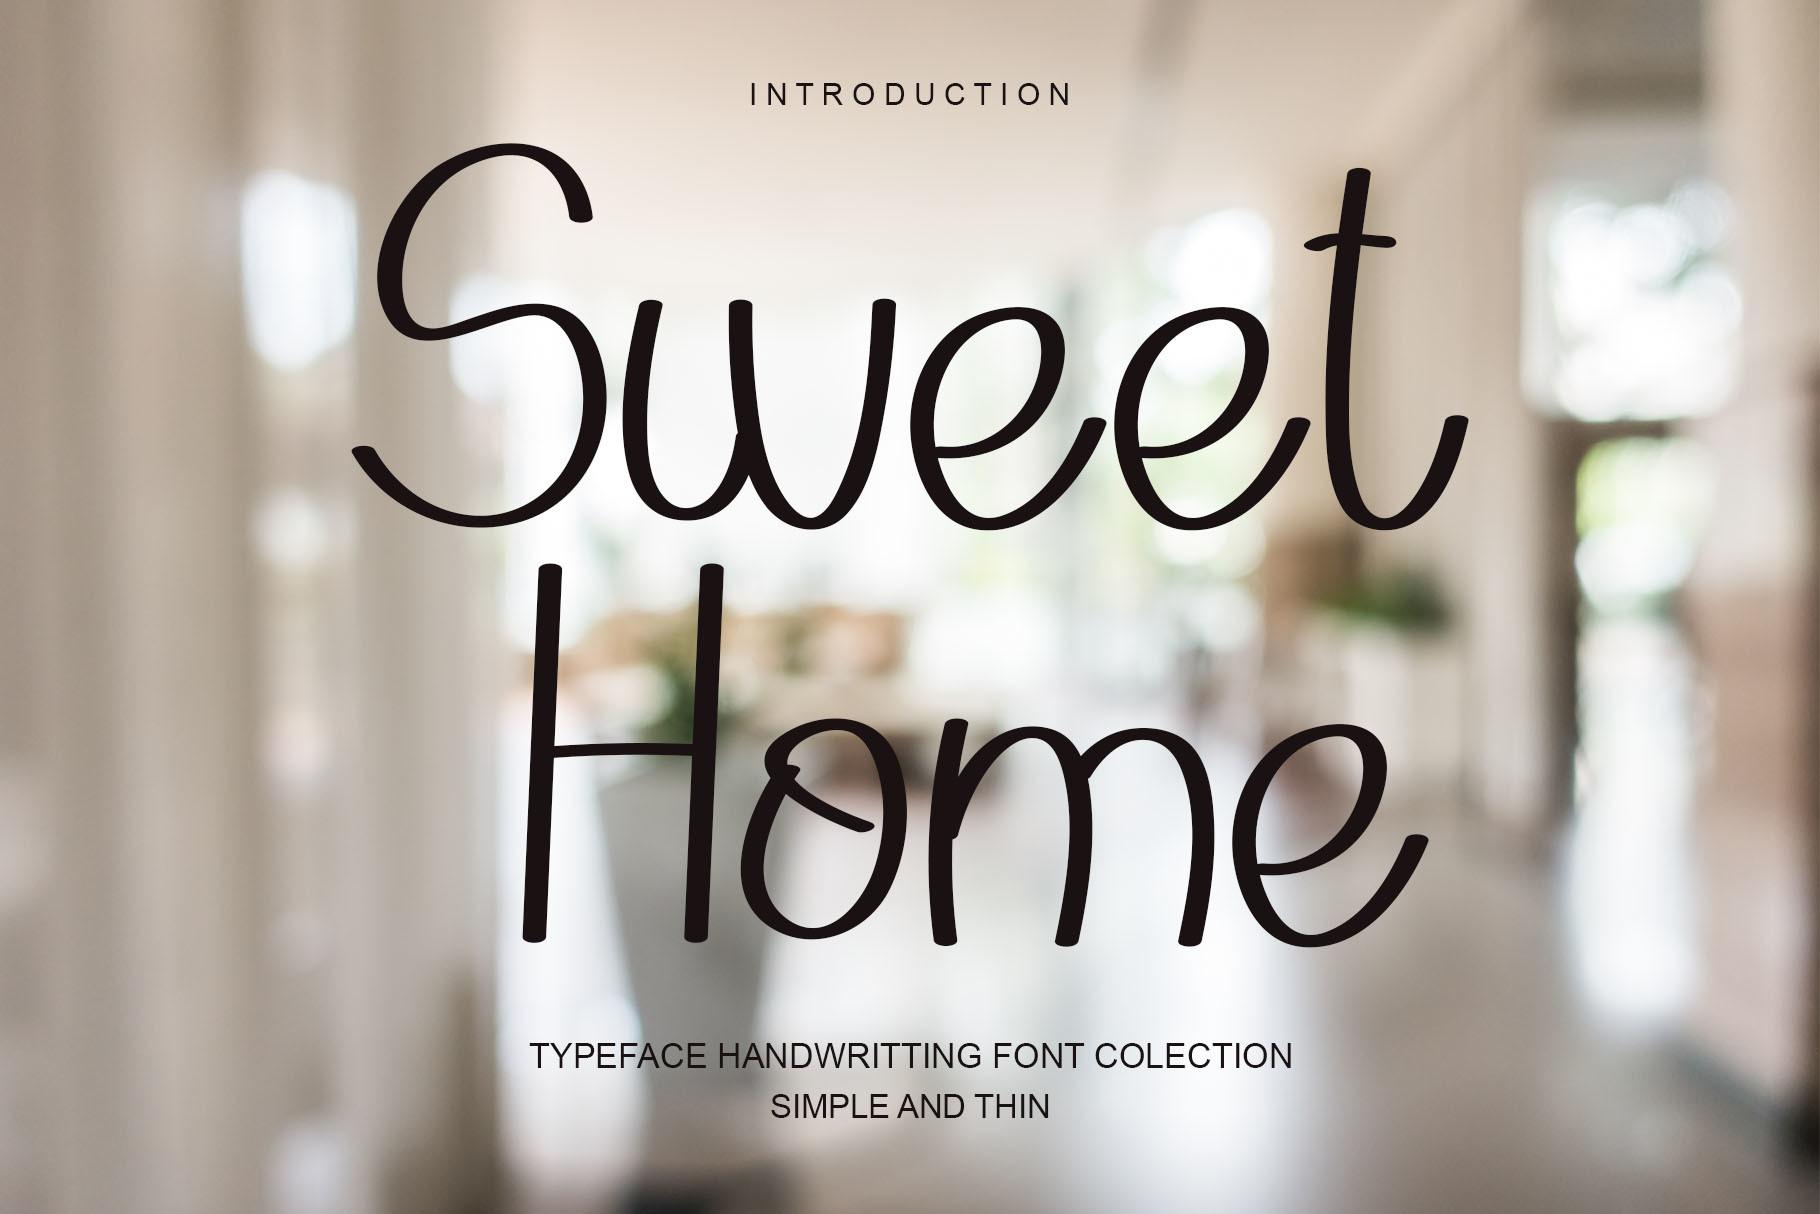 Sweet Home Font